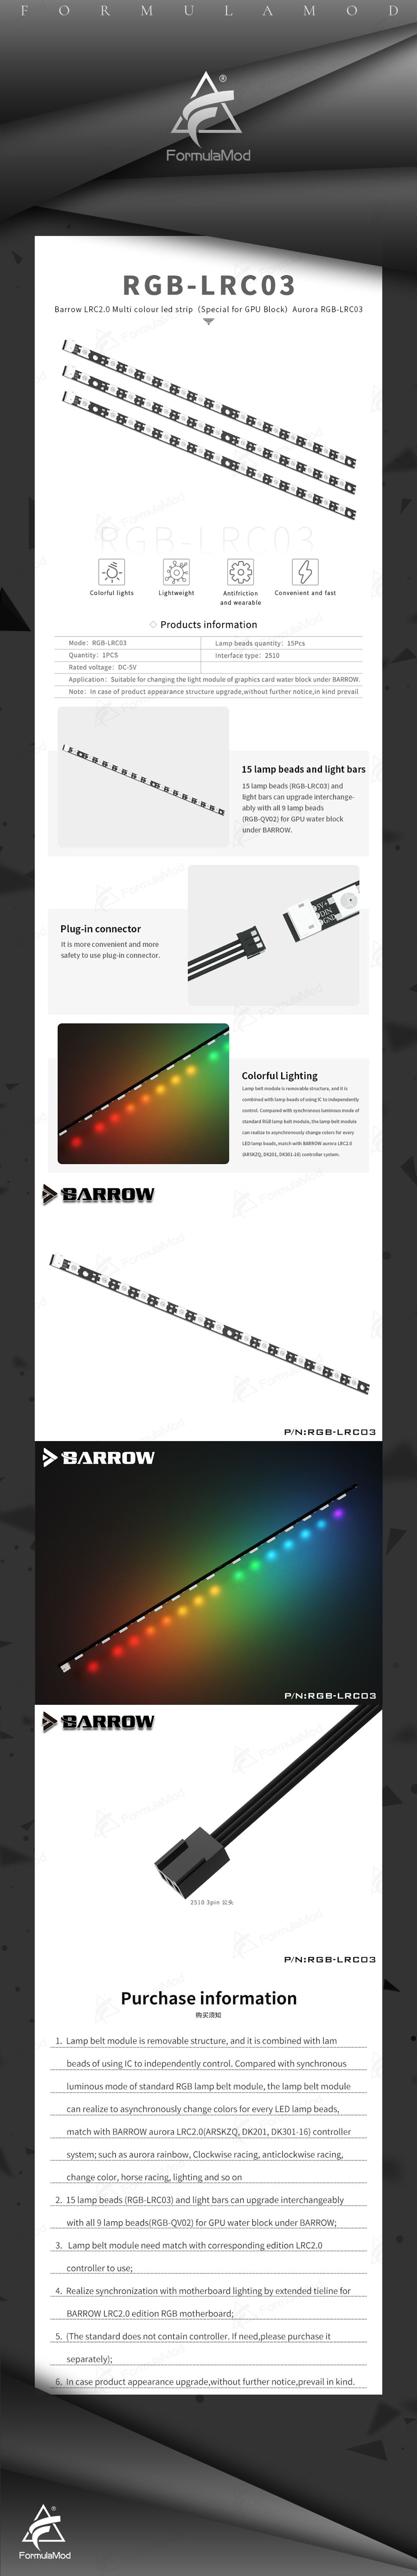 Barrow LRC2.0 5v 3pin Light Strips, Special For Barrow Graphics Card Block, Aurora 15 Lighting Beads, RGB-LRC03  